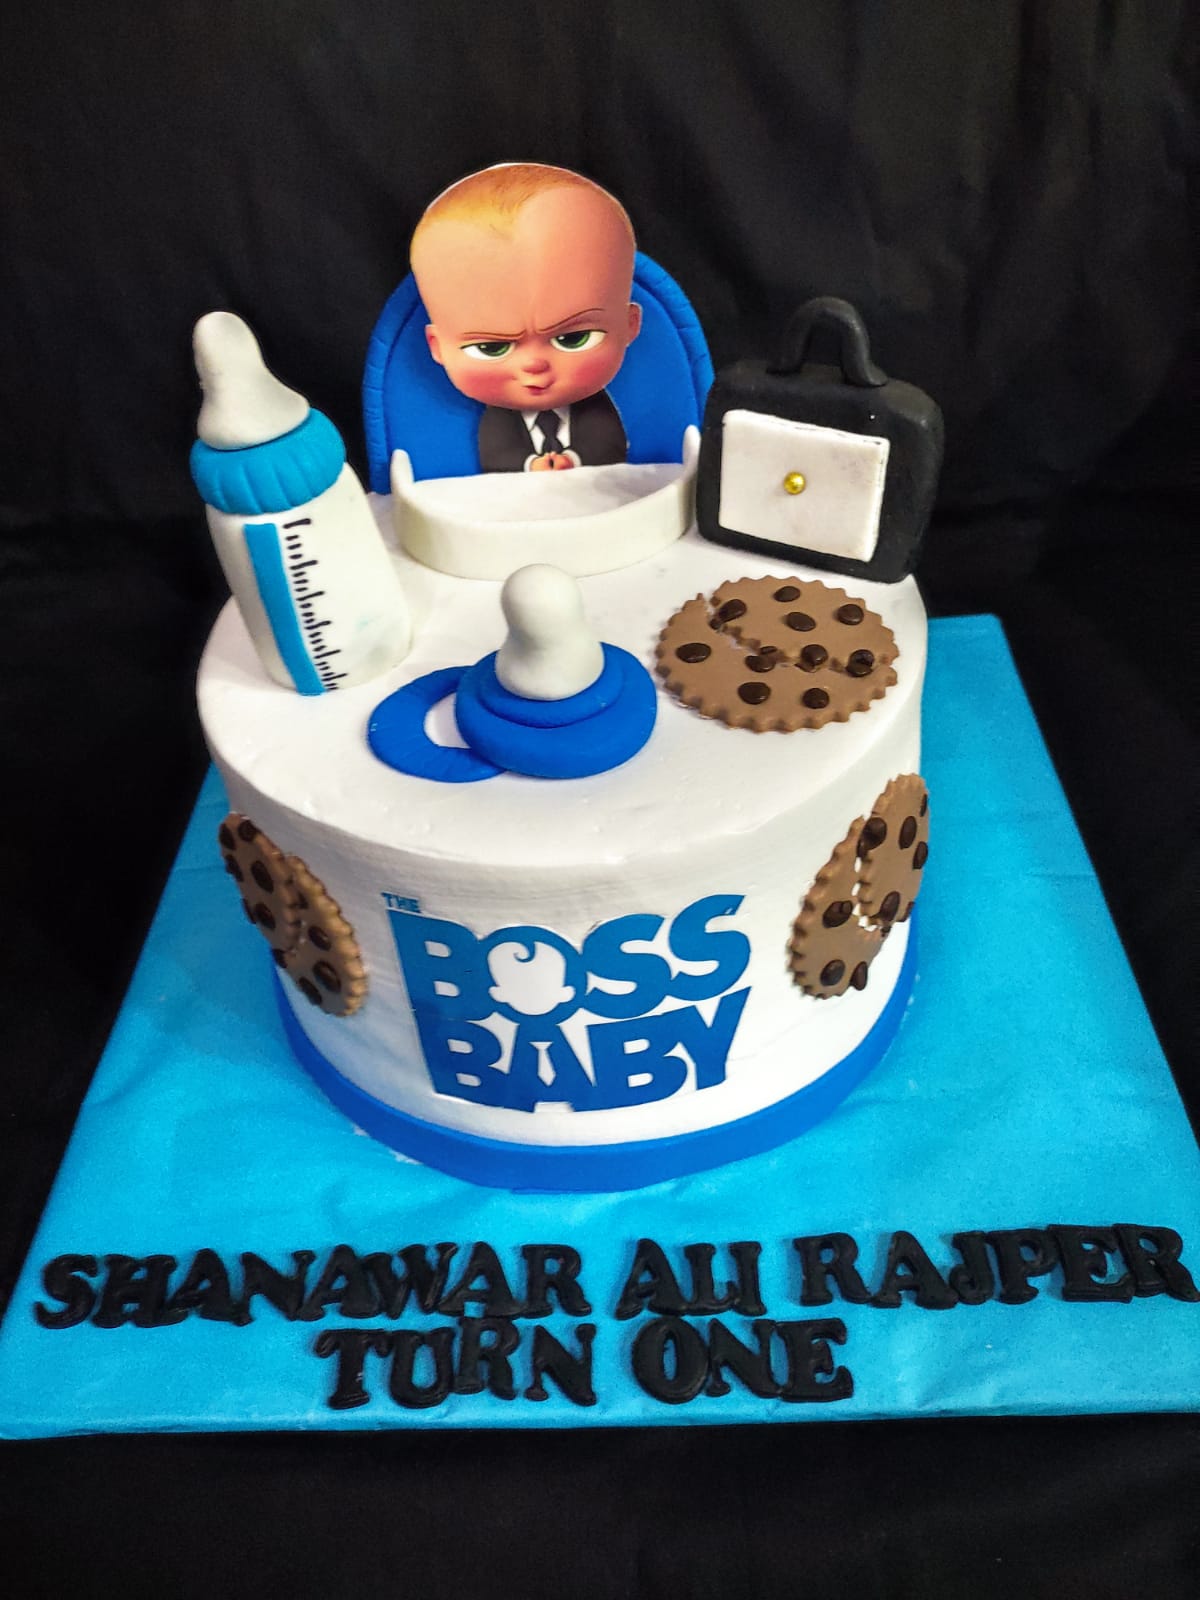 Boss baby theme cream with fondant cake 